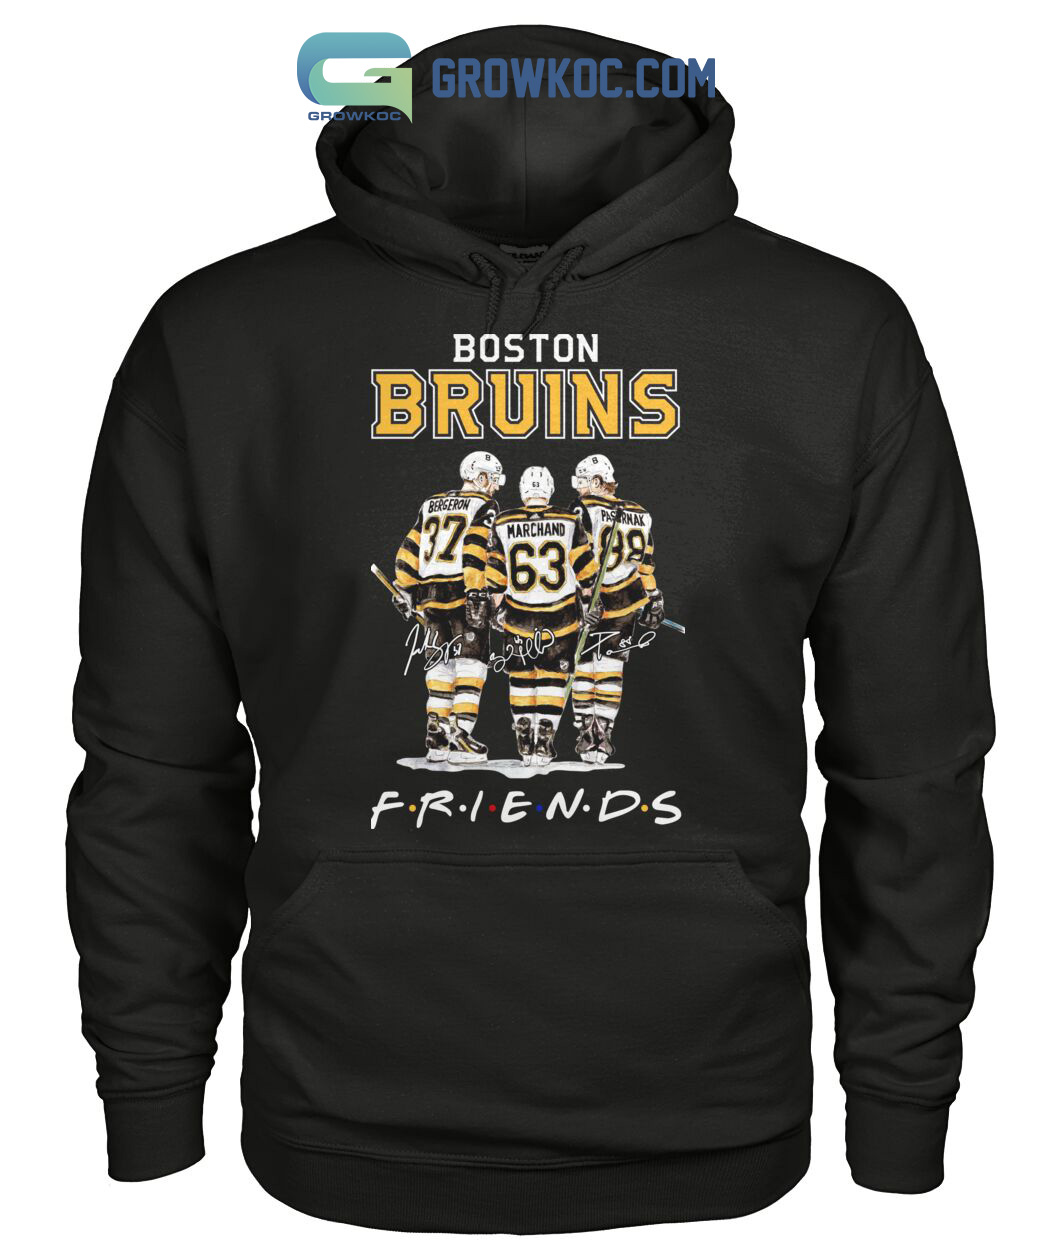 Boston Bruins Nhl Friencs Bergeron Marchand Pastrnak Shirt